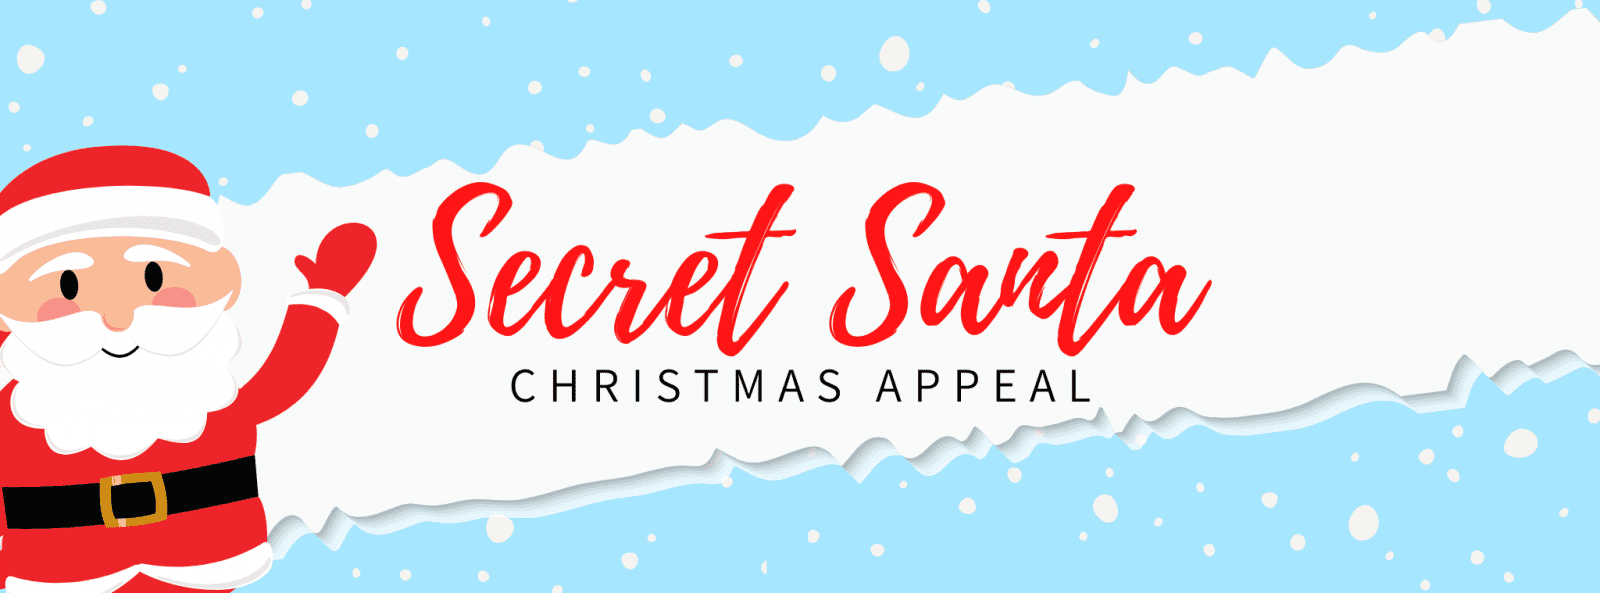 secret Santa Christmas appeal animation